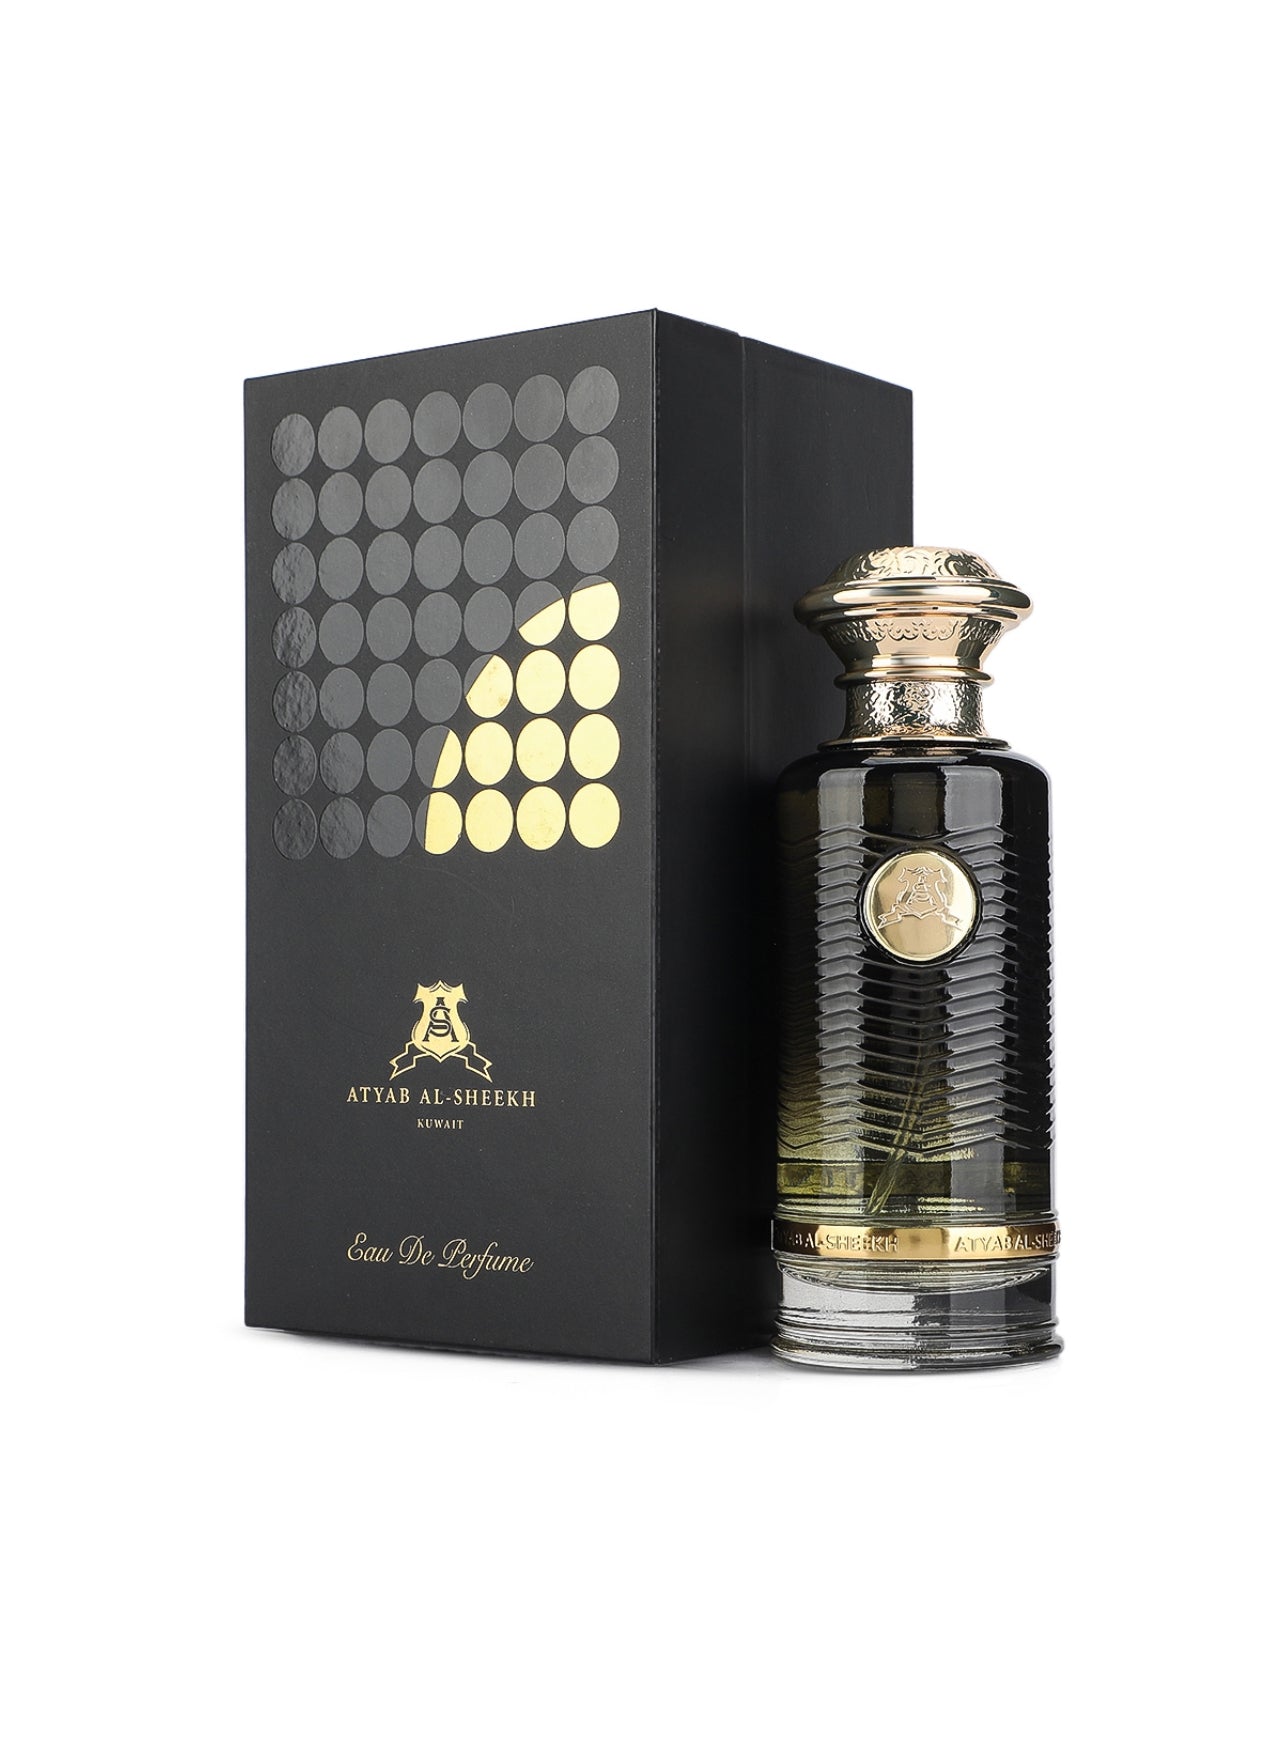 Atyab Al Sheekh Private Eau de Parfum - 220 ml